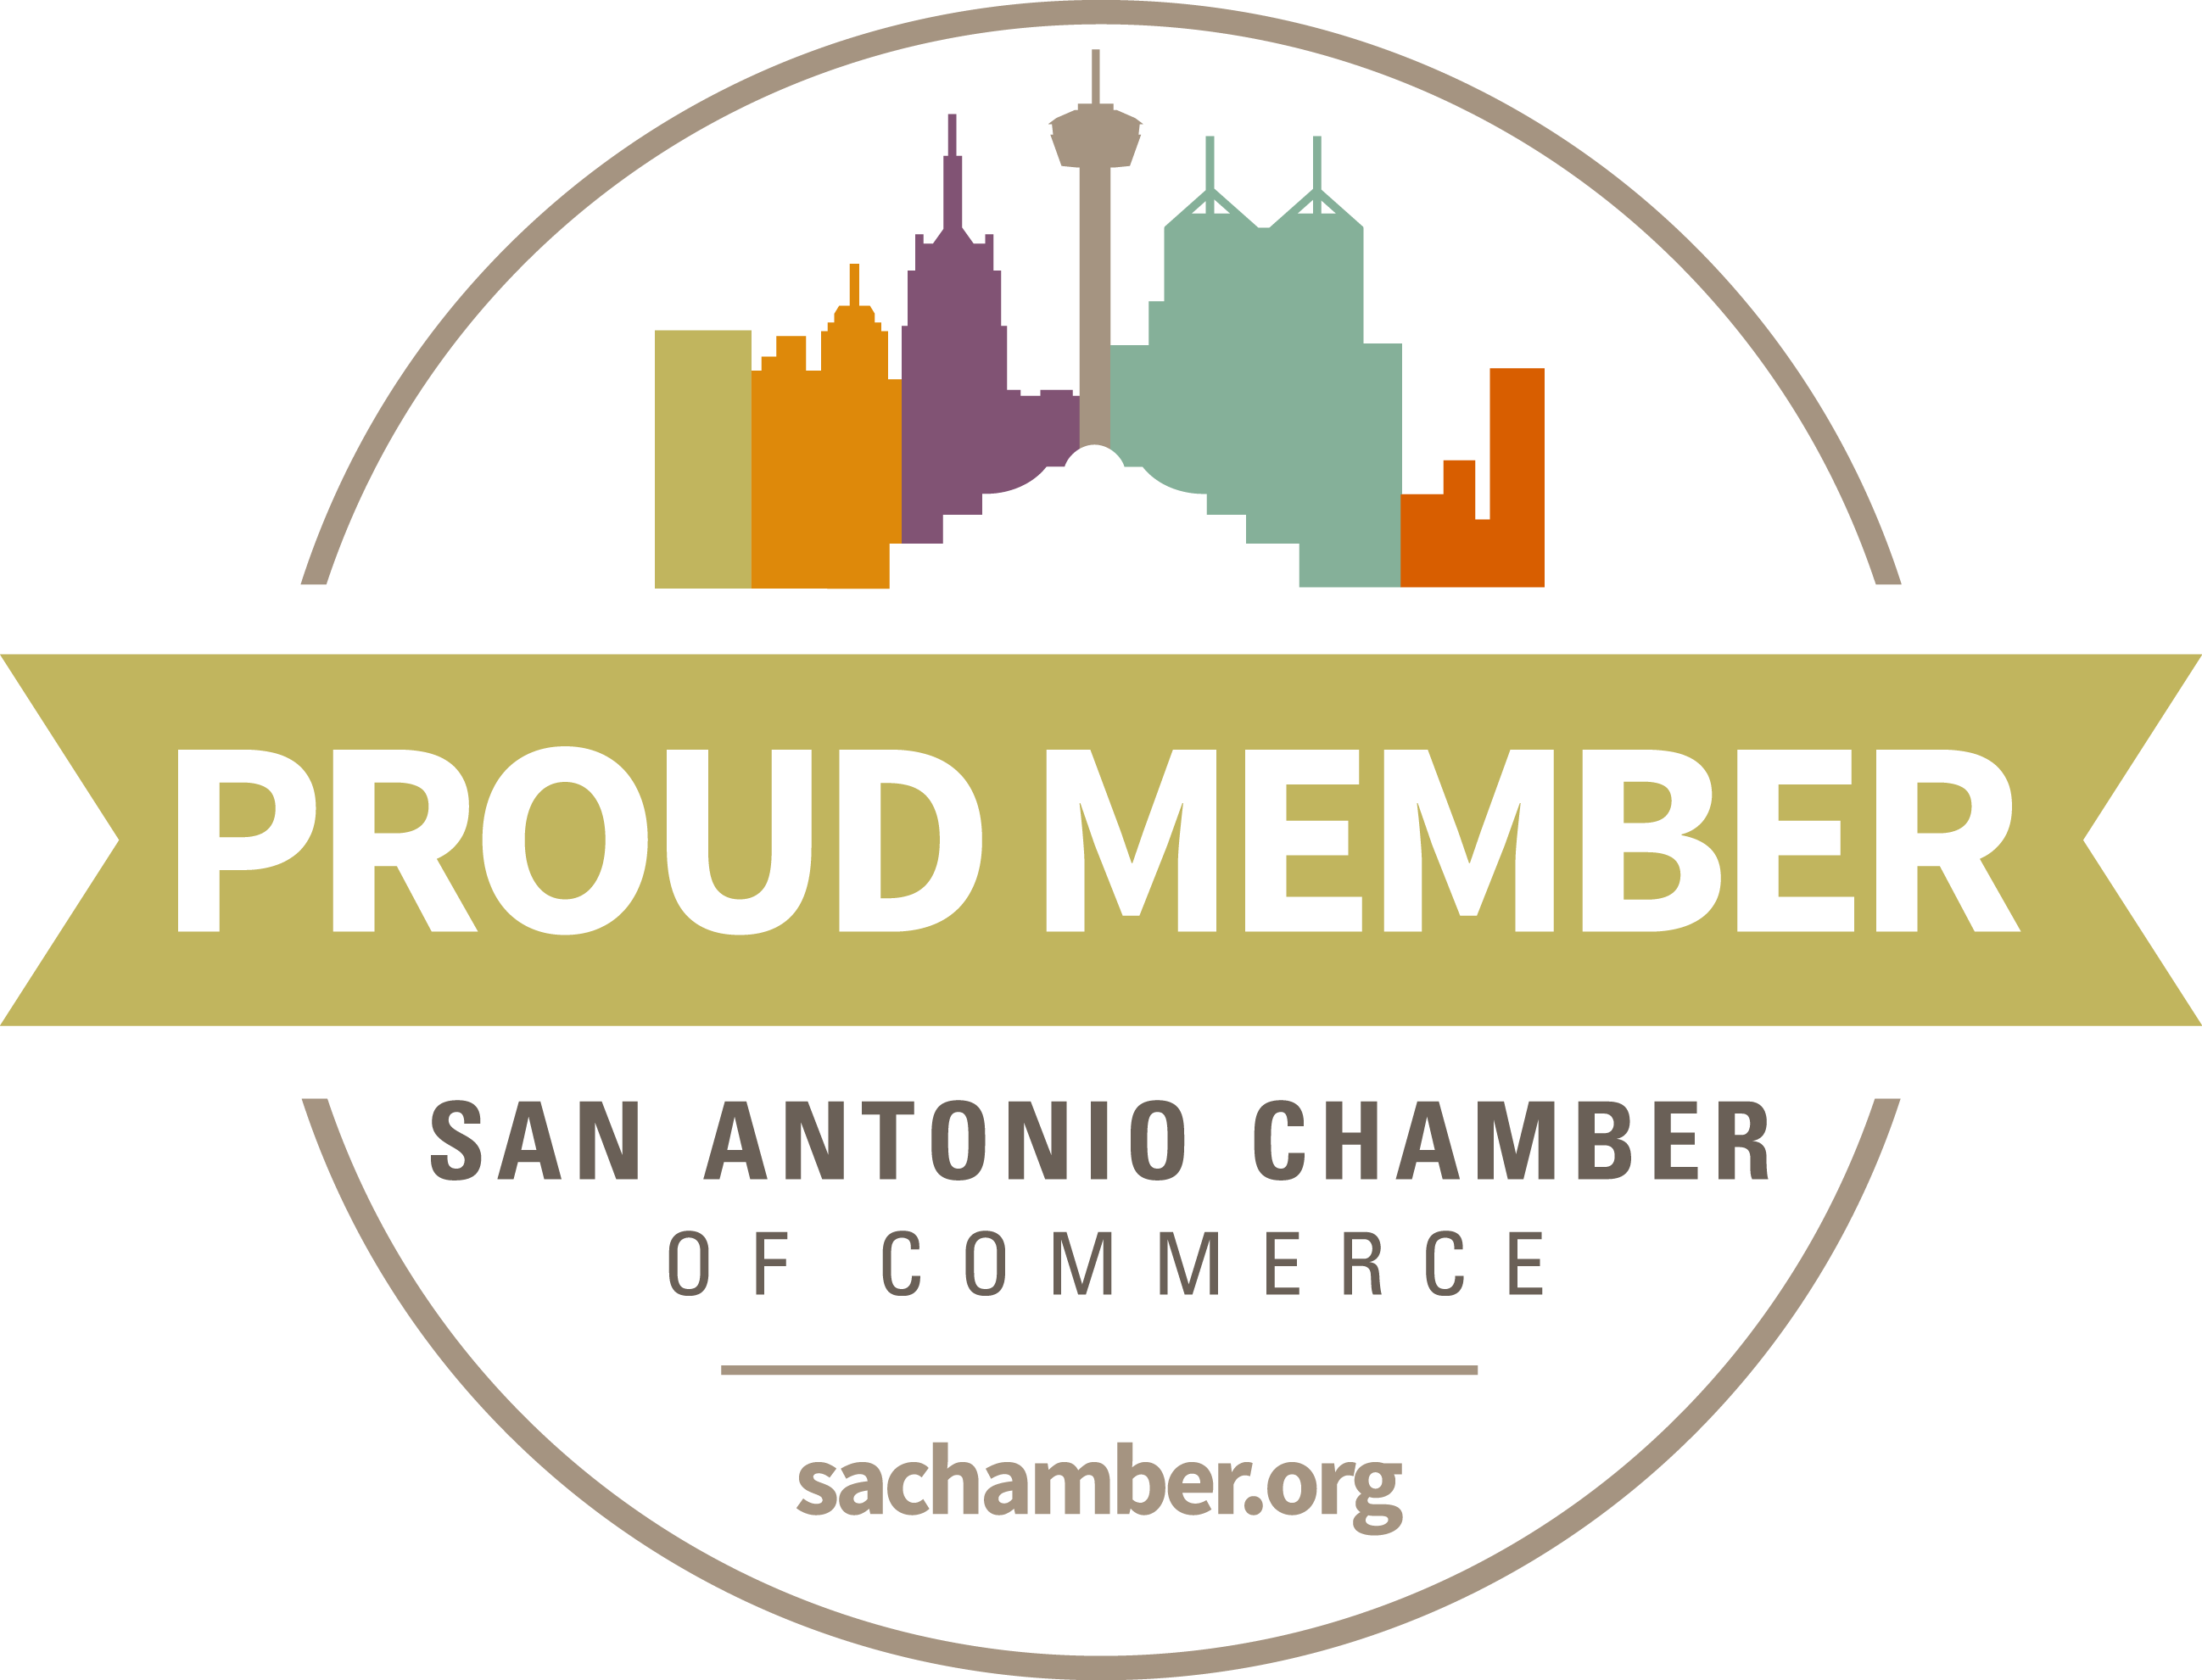 Proud member of the San Antonio Chamber of Commerce